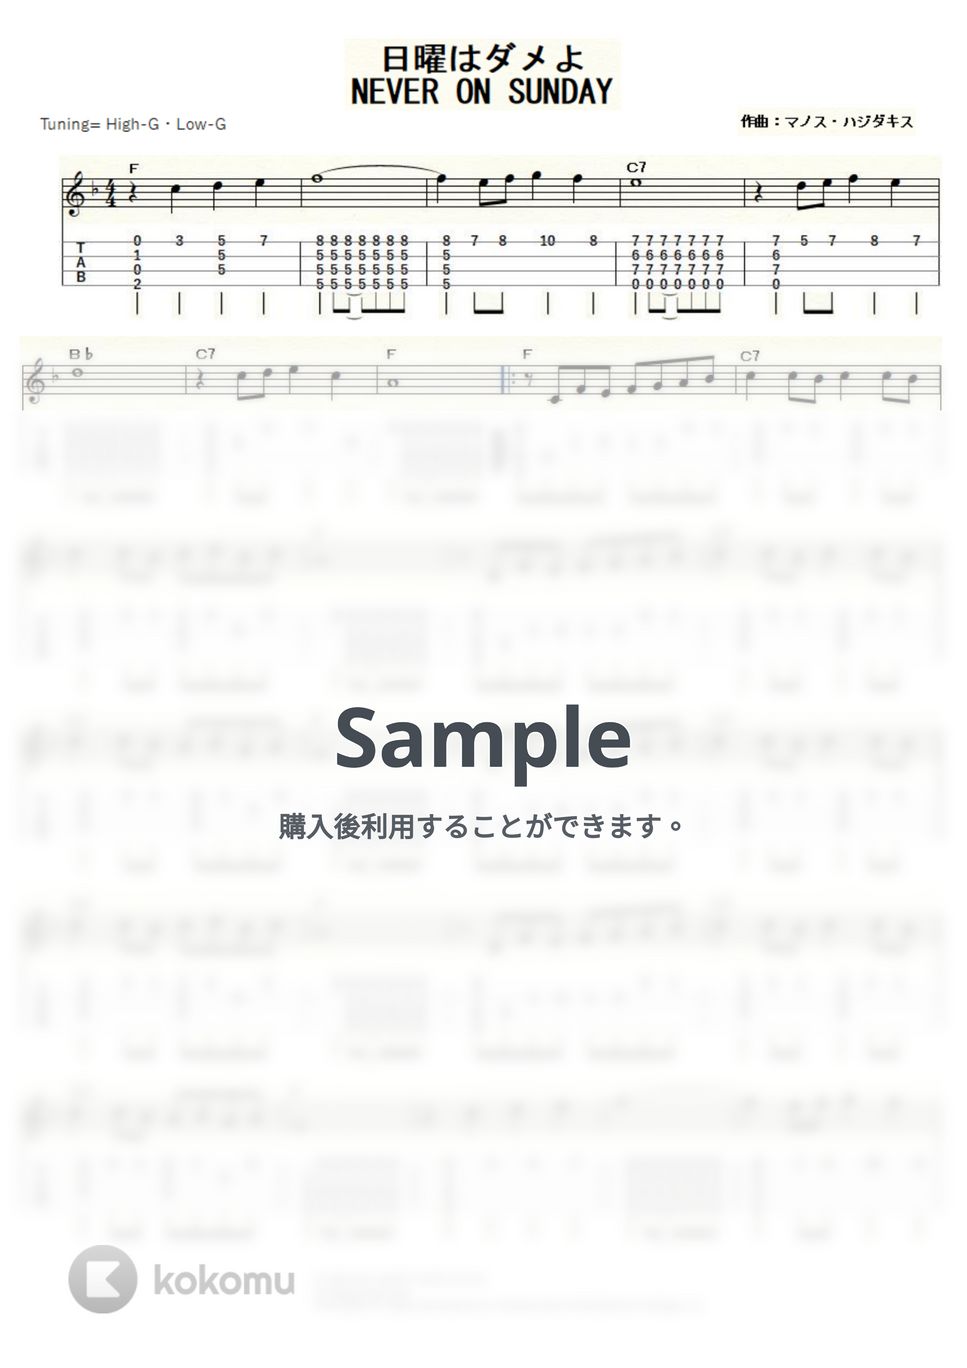 NEVER ON SUNDAY - 日曜はダメよ (ｳｸﾚﾚｿﾛ / High-G・Low-G / 初級～中級) by ukulelepapa